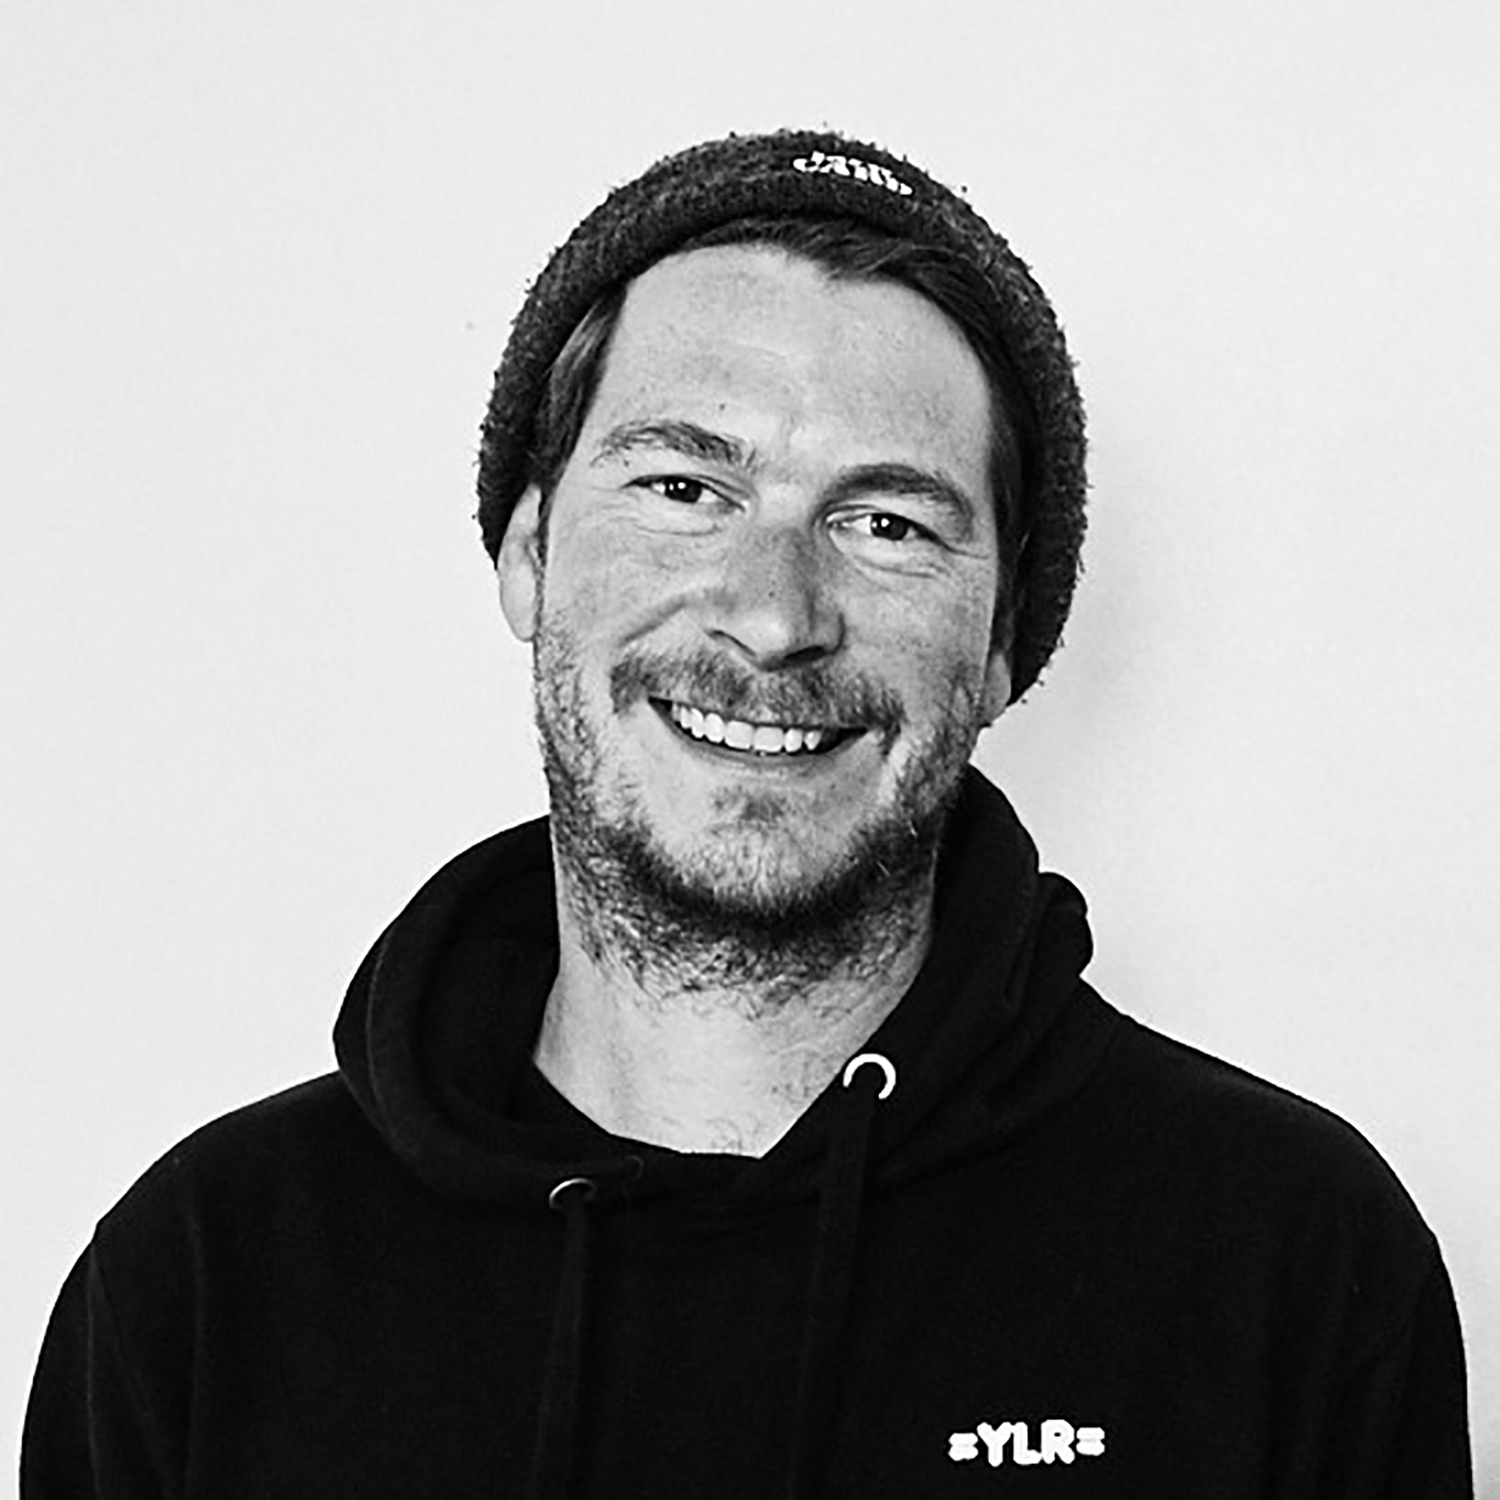 Interview with Make Life Skate Life founder Arne Hillerns